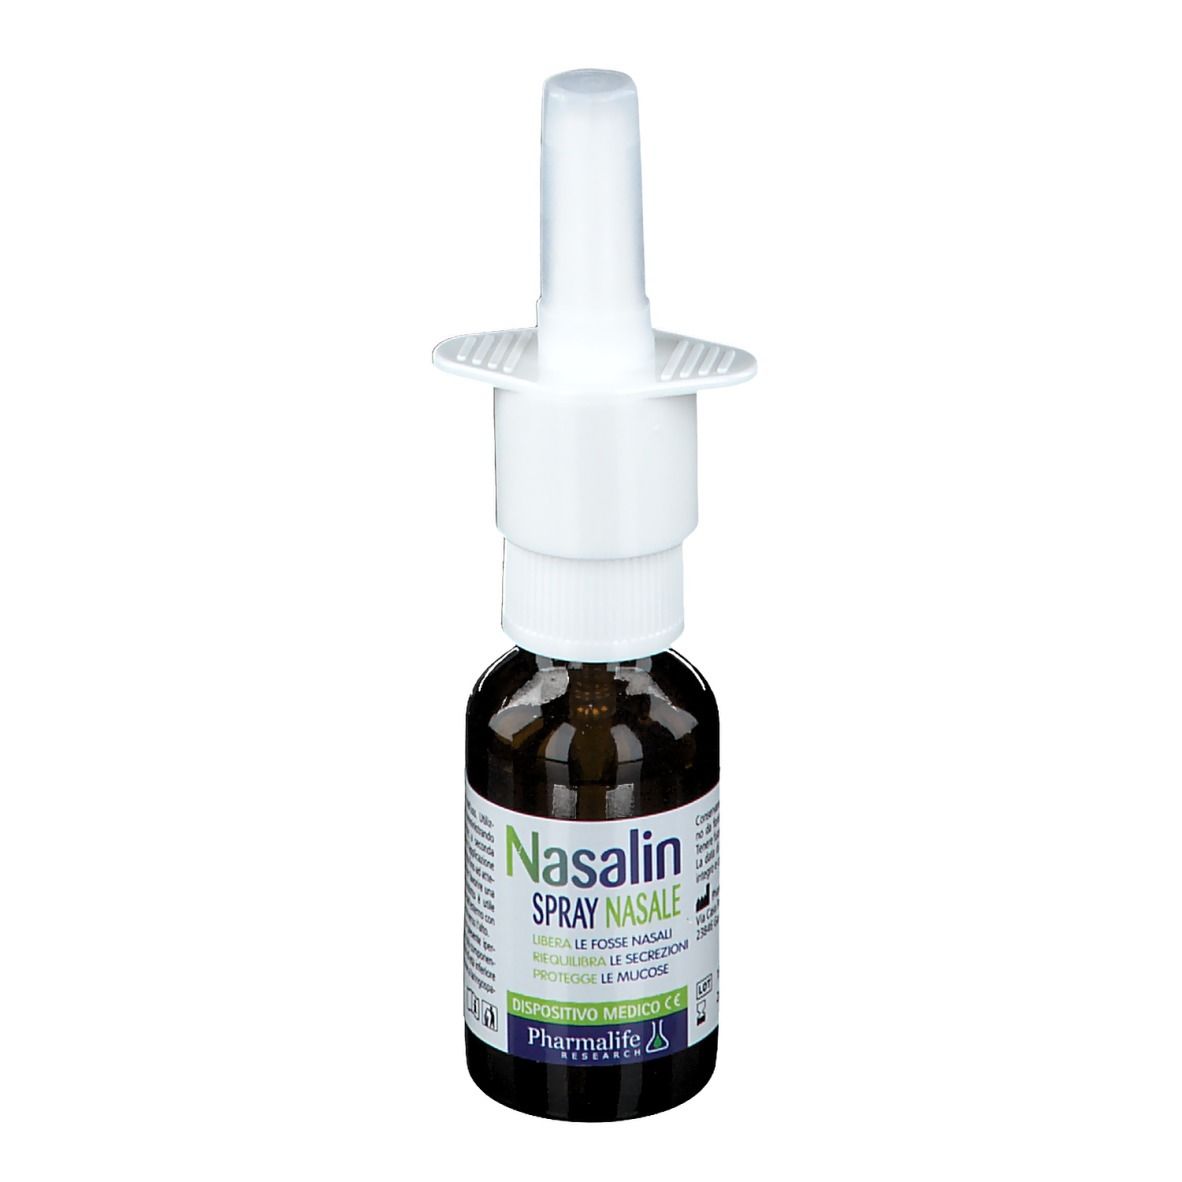 Pharmalife Research Nasalin Spray Nasale